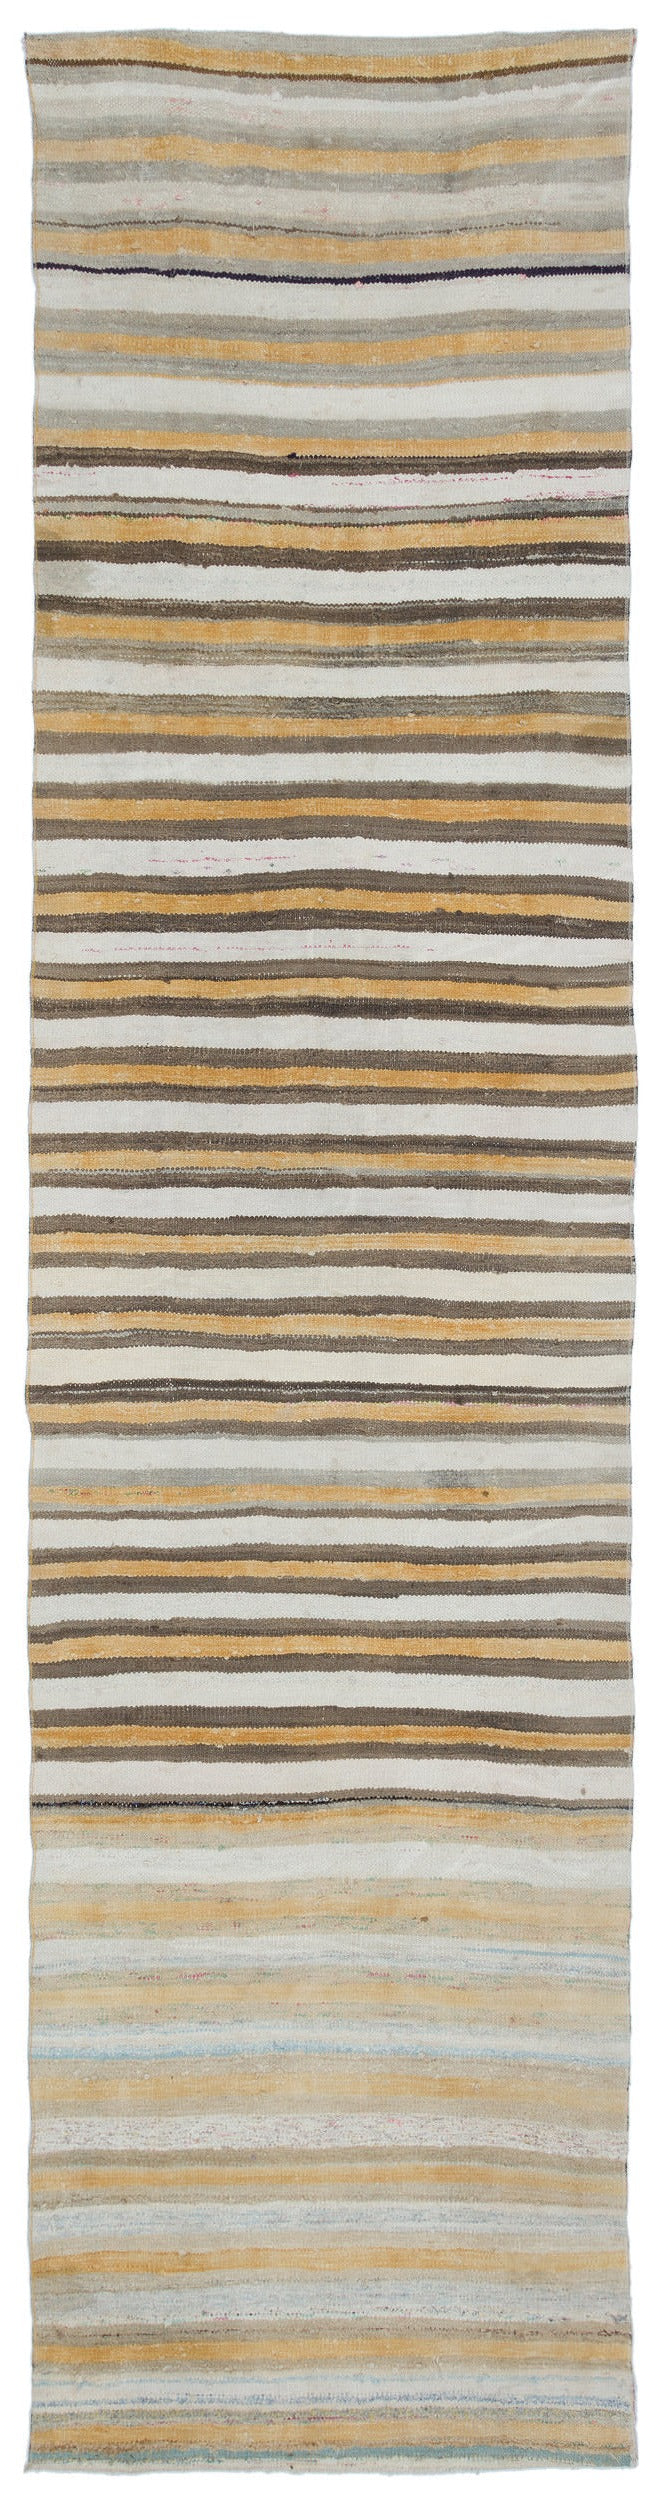 Cretan Beige Striped Wool Hand Woven Carpet 095 x 368